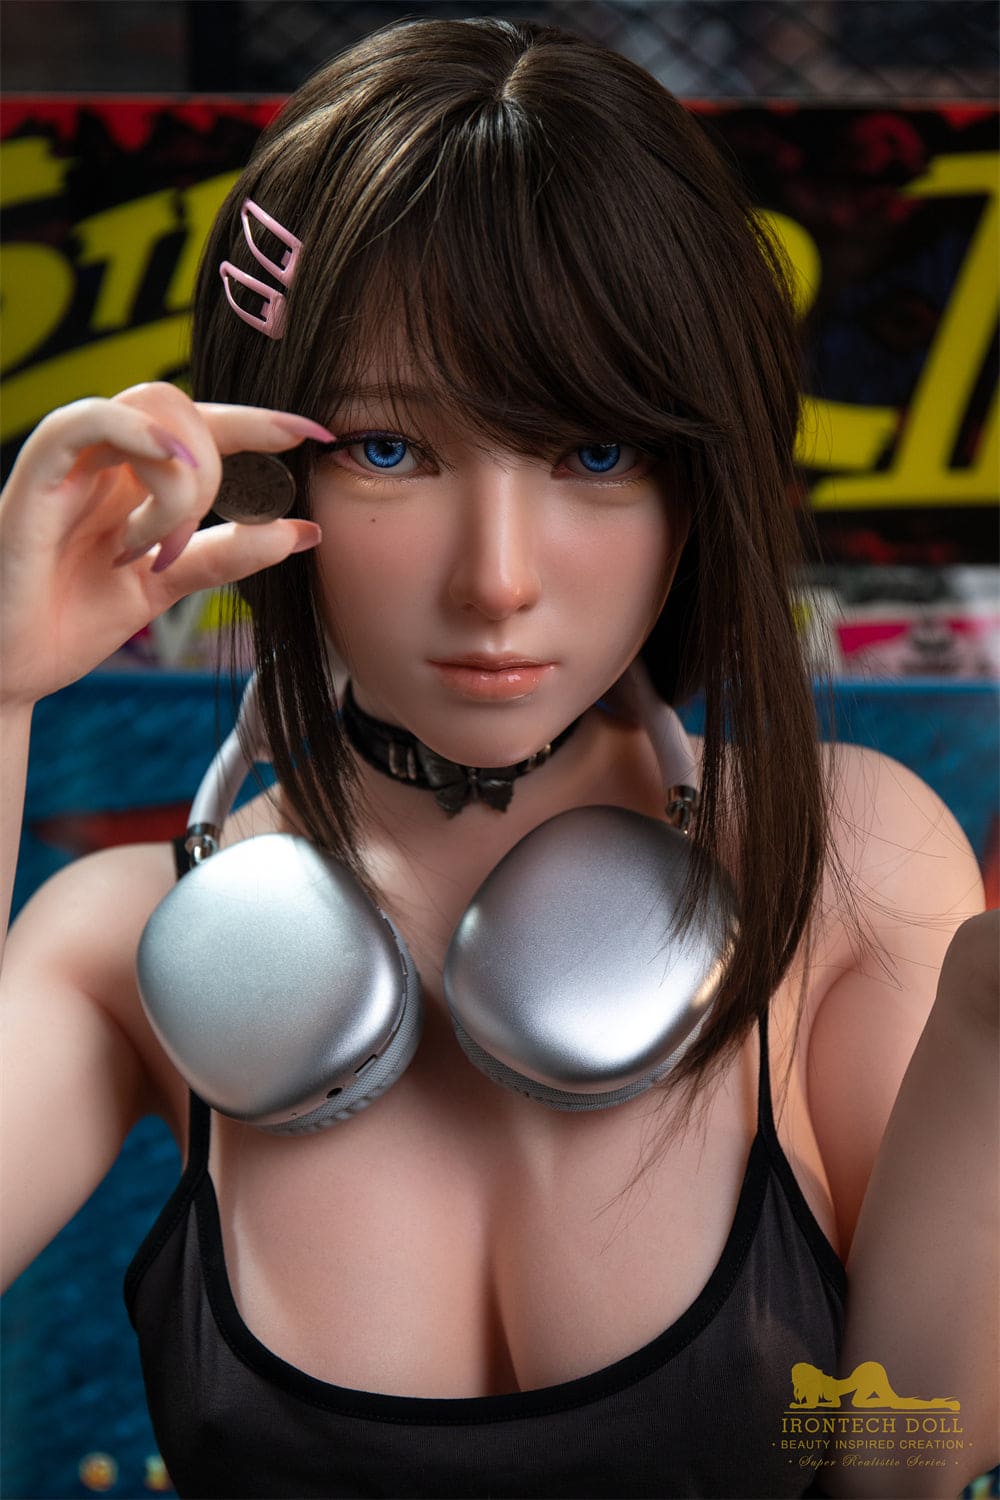 Irontech Premium Ultra Realistic Silicone Series Love Sex Doll - Emi 148cm